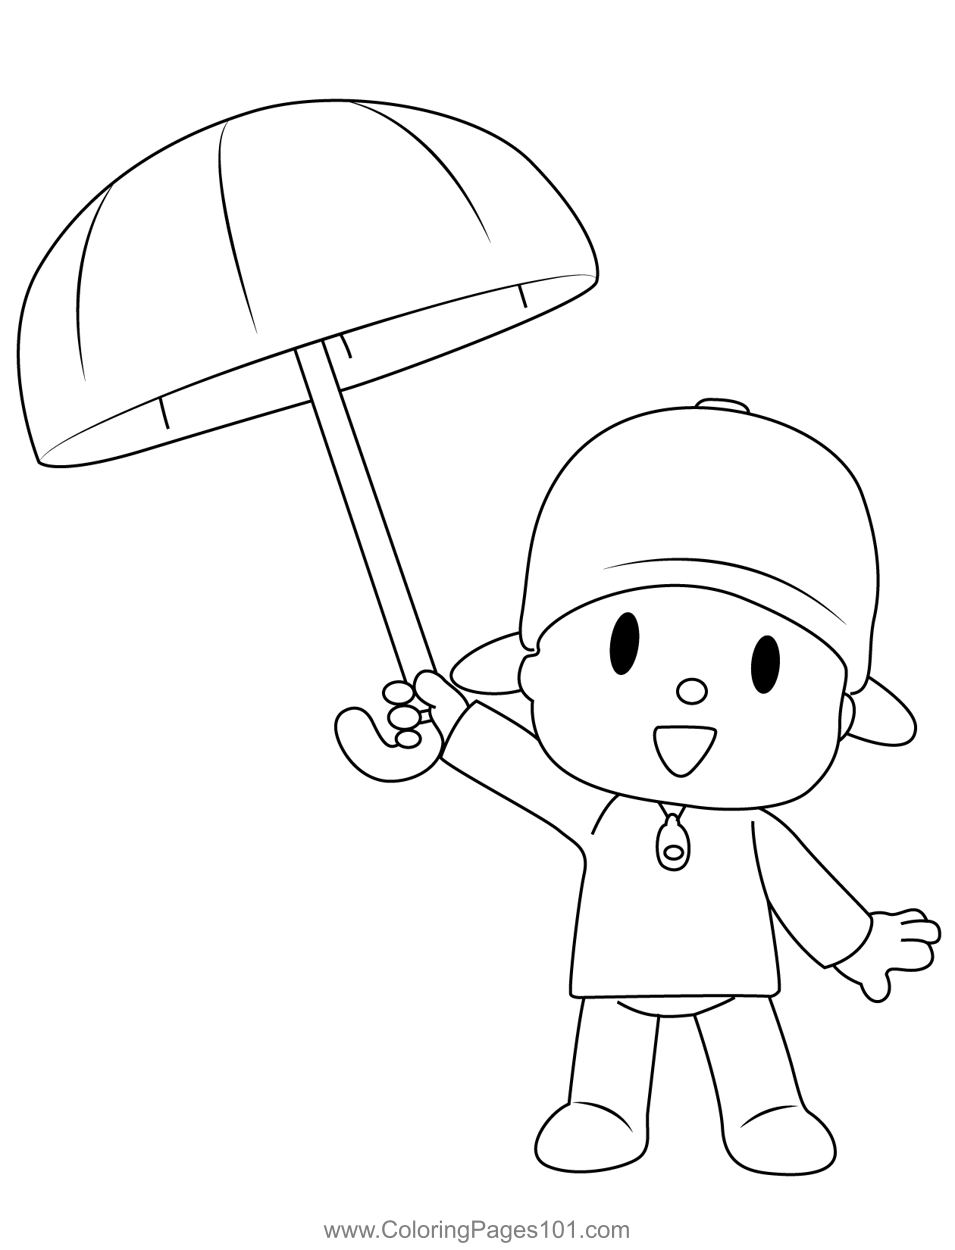 Umbrella With Pocoyo